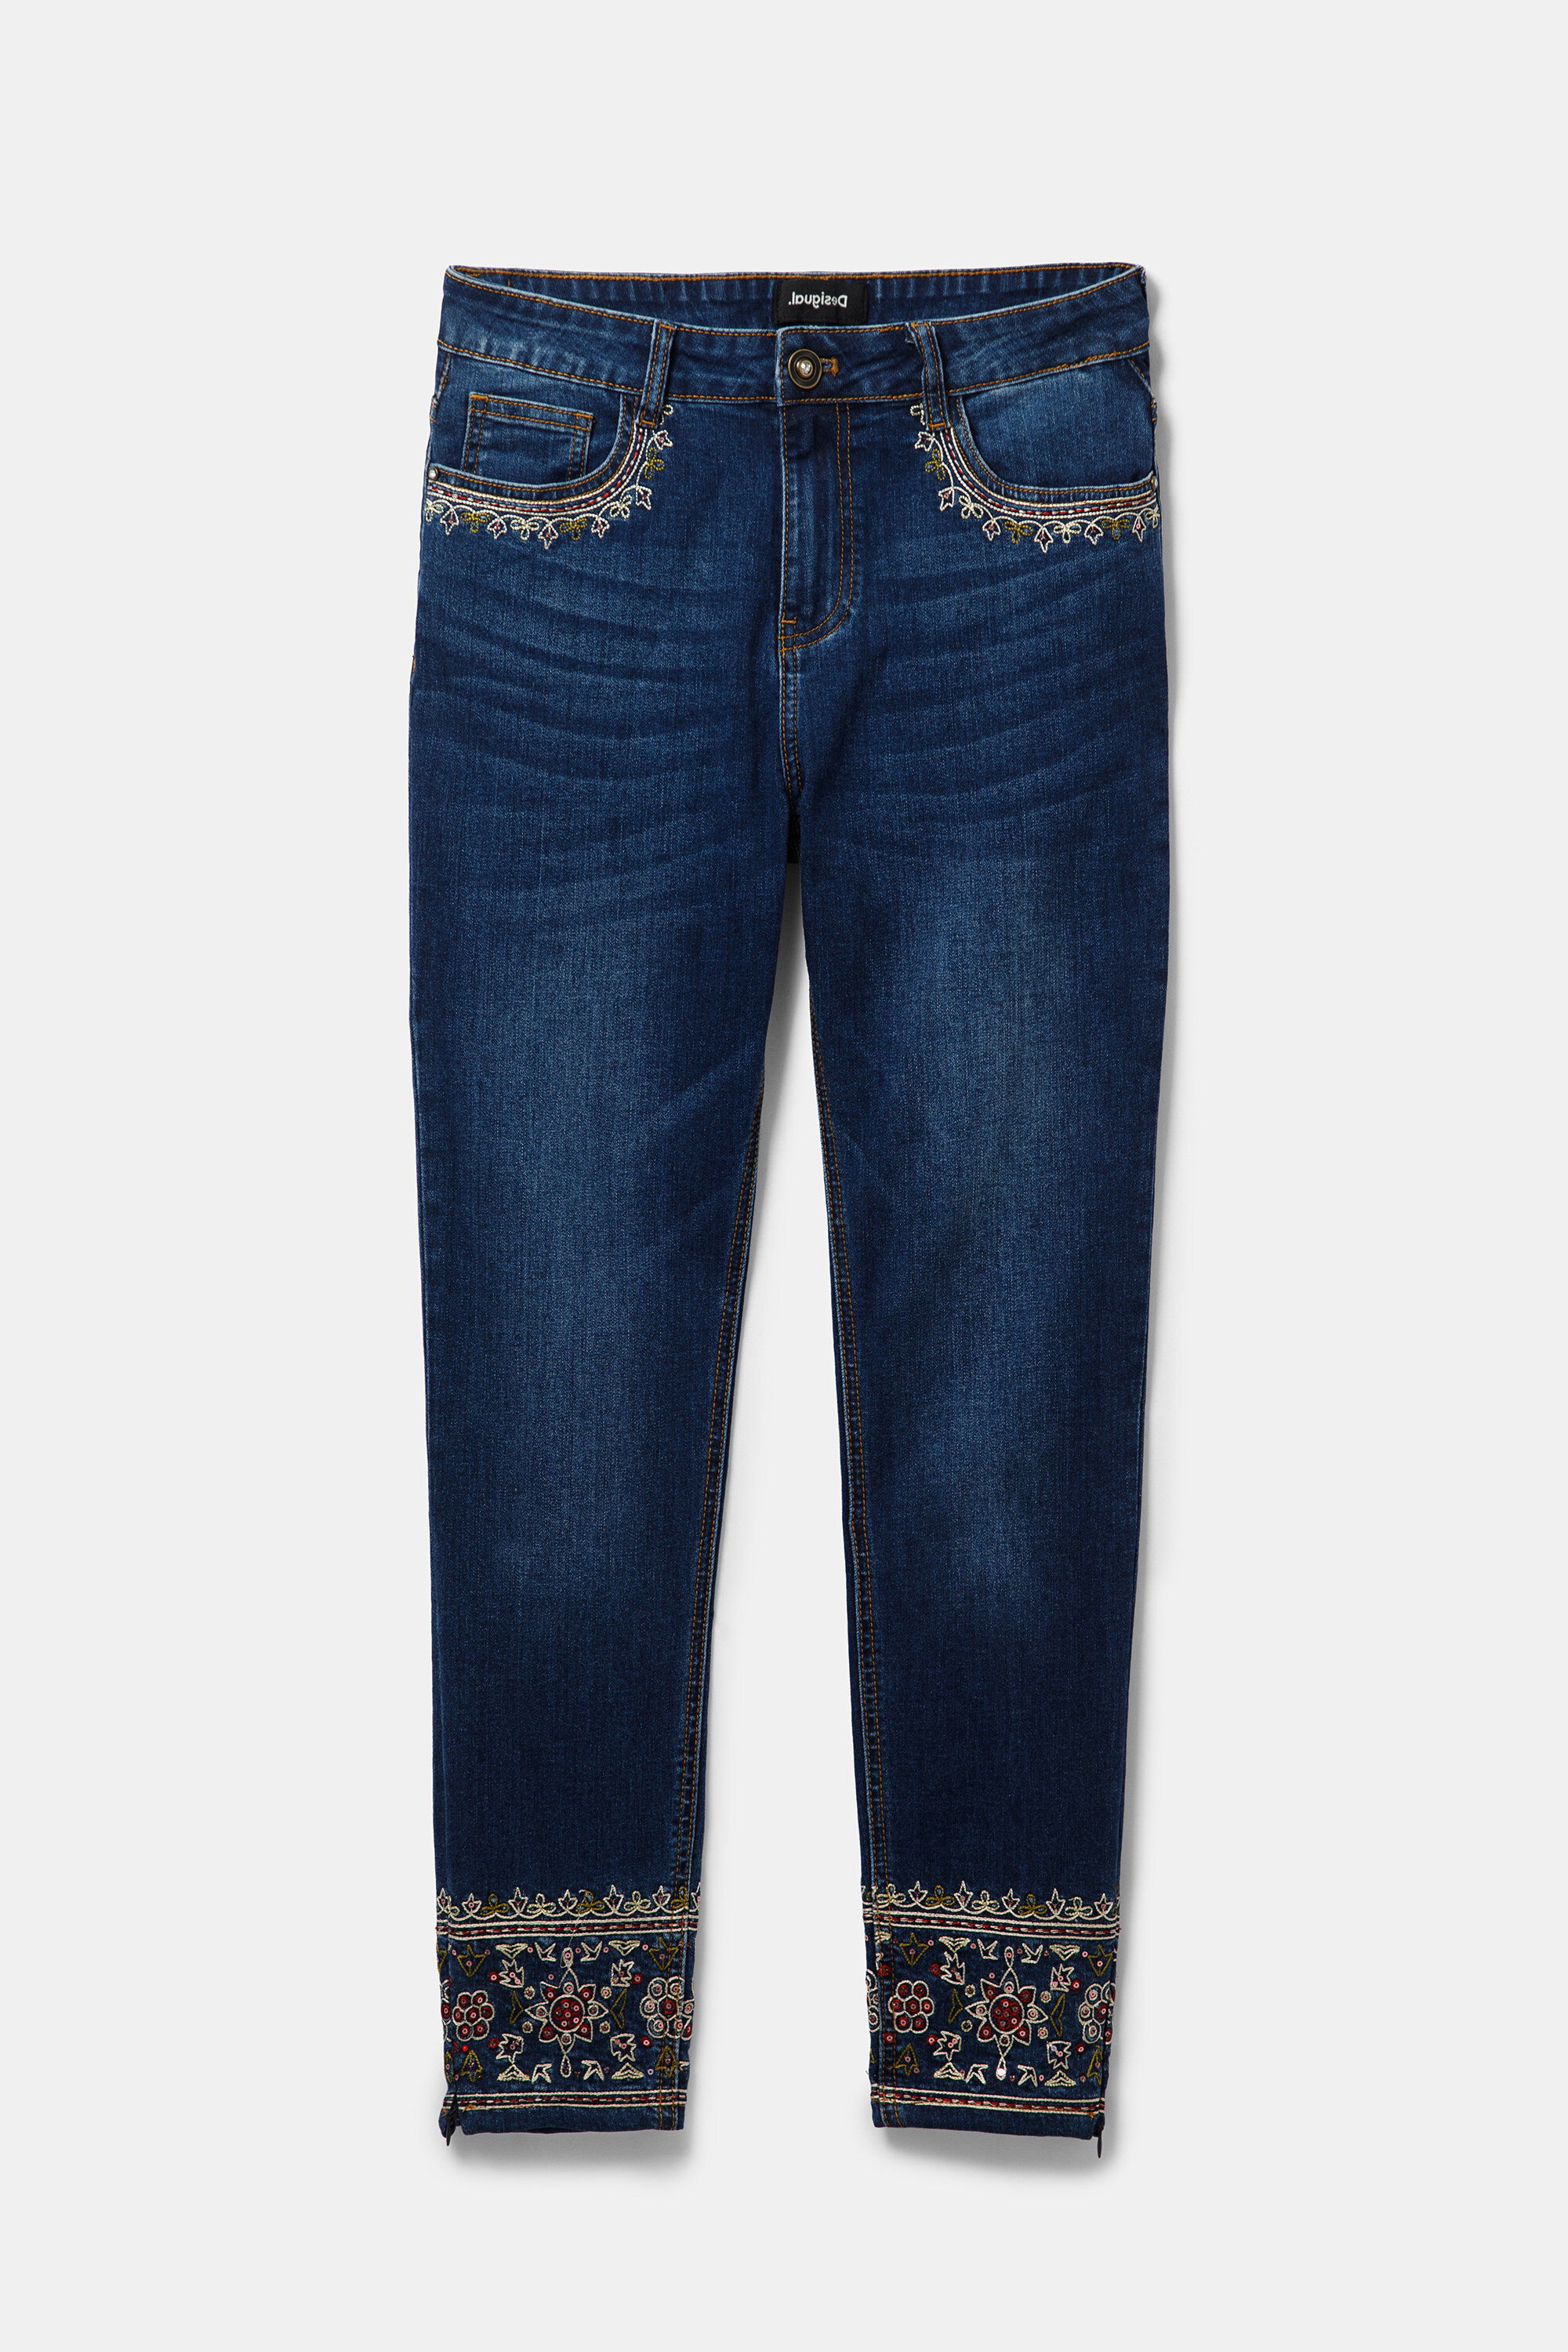 desigual exotic jeans